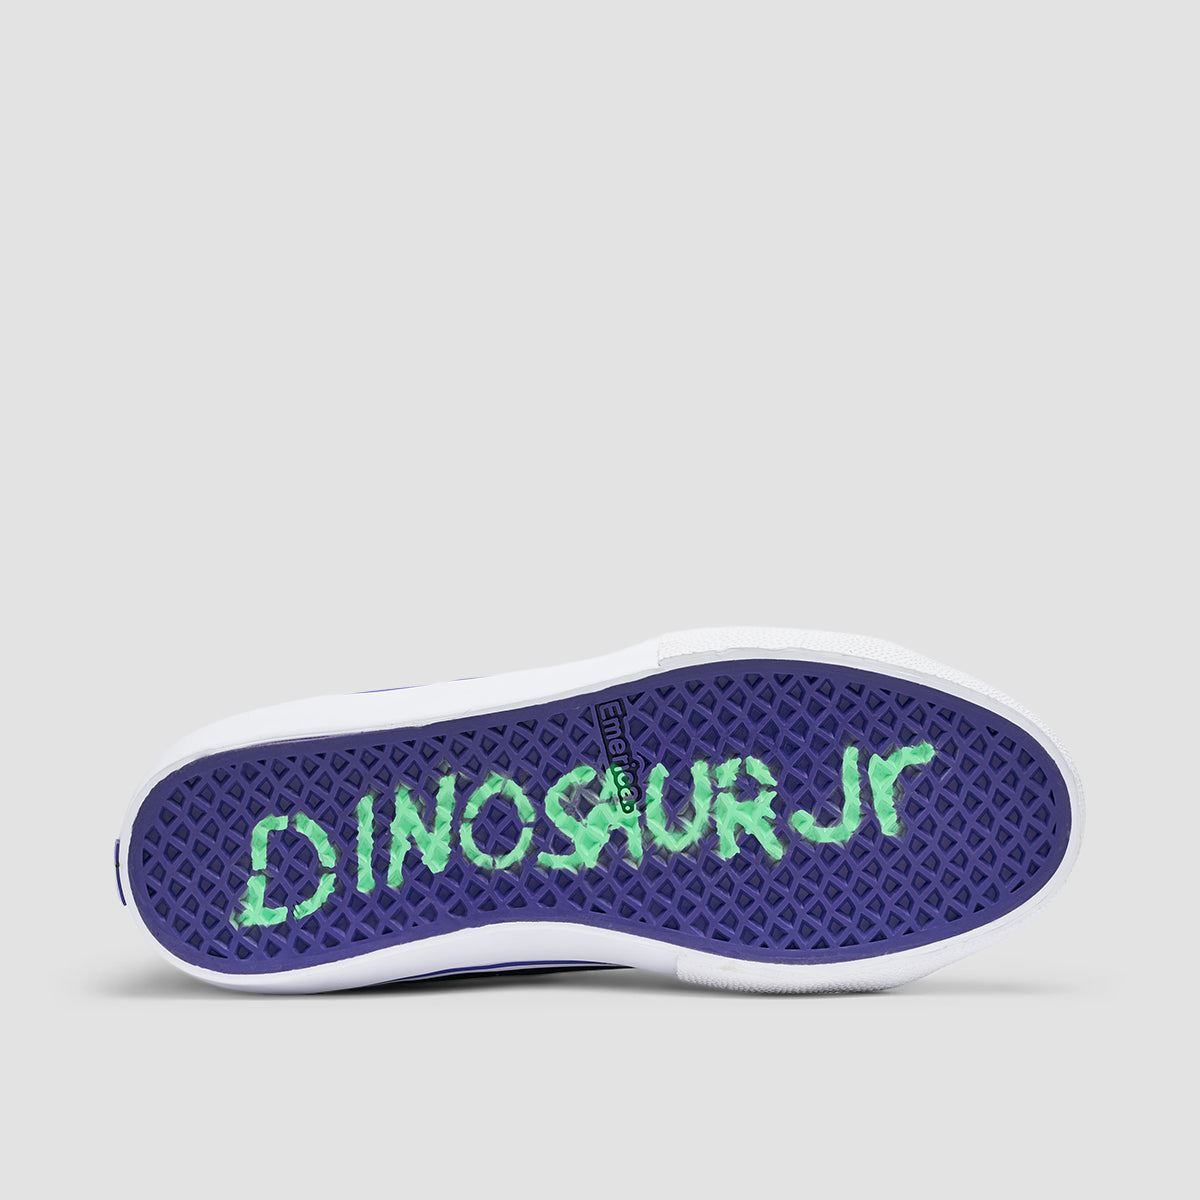 Emerica Omen X Dinosaur Jr. High Top Shoes Black/Purple